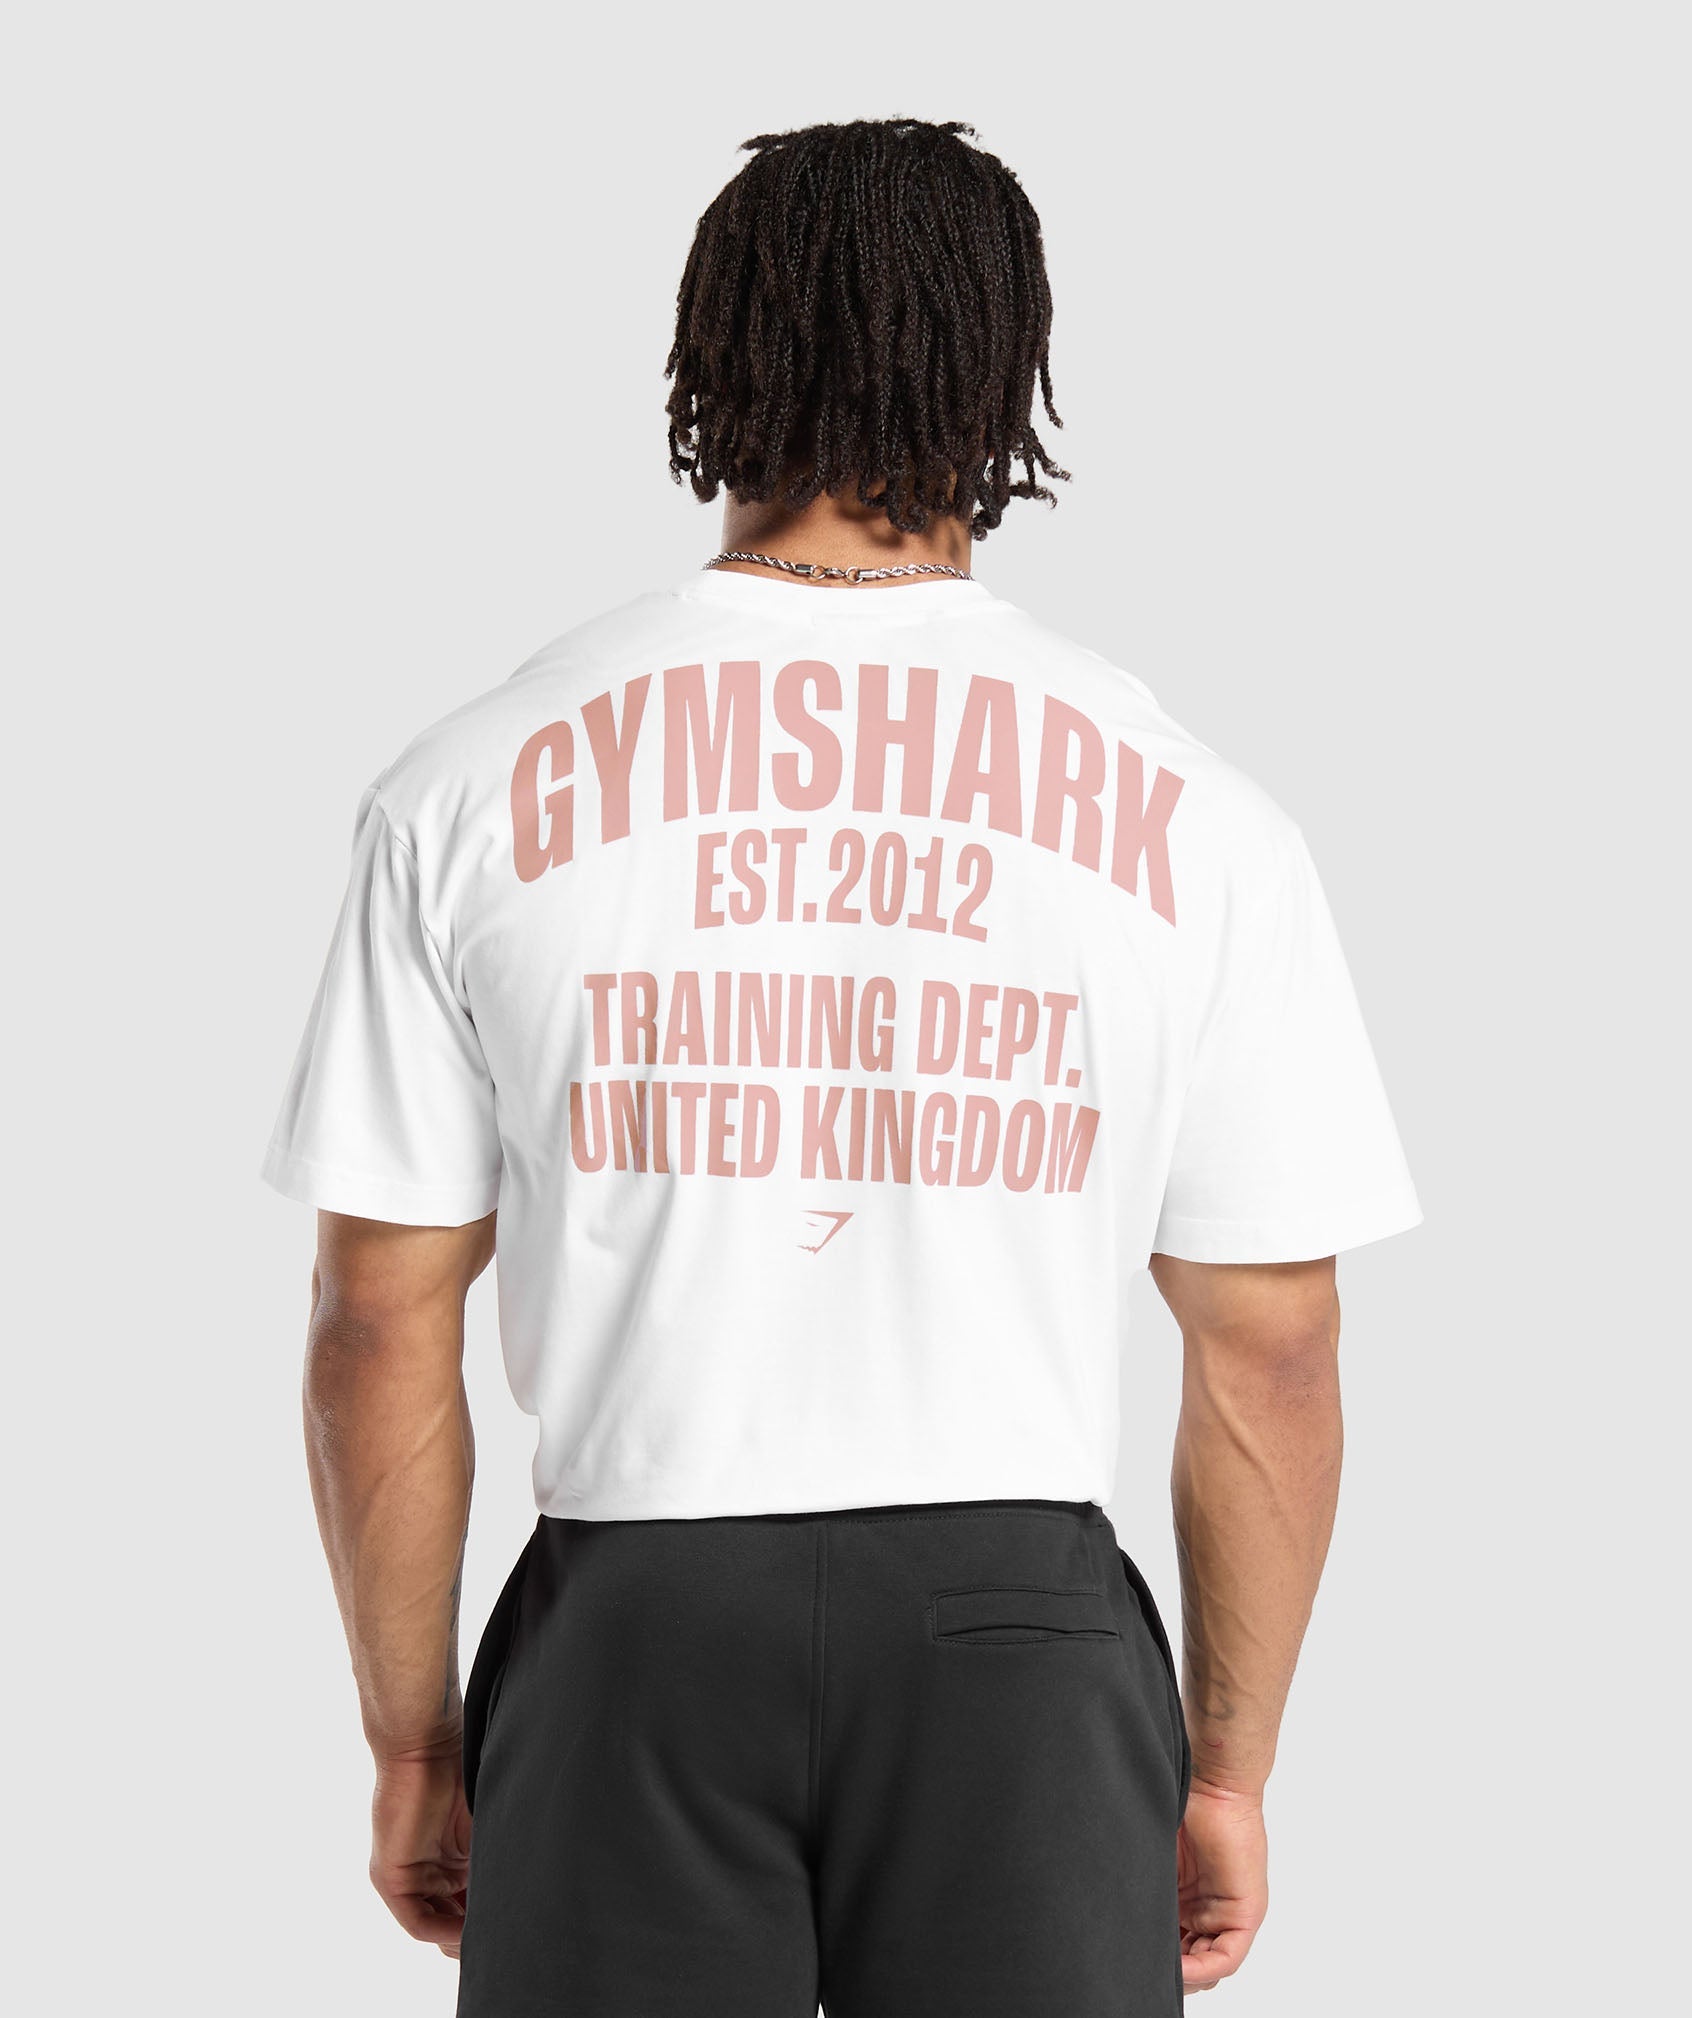 Training Dept. UK T-Shirt